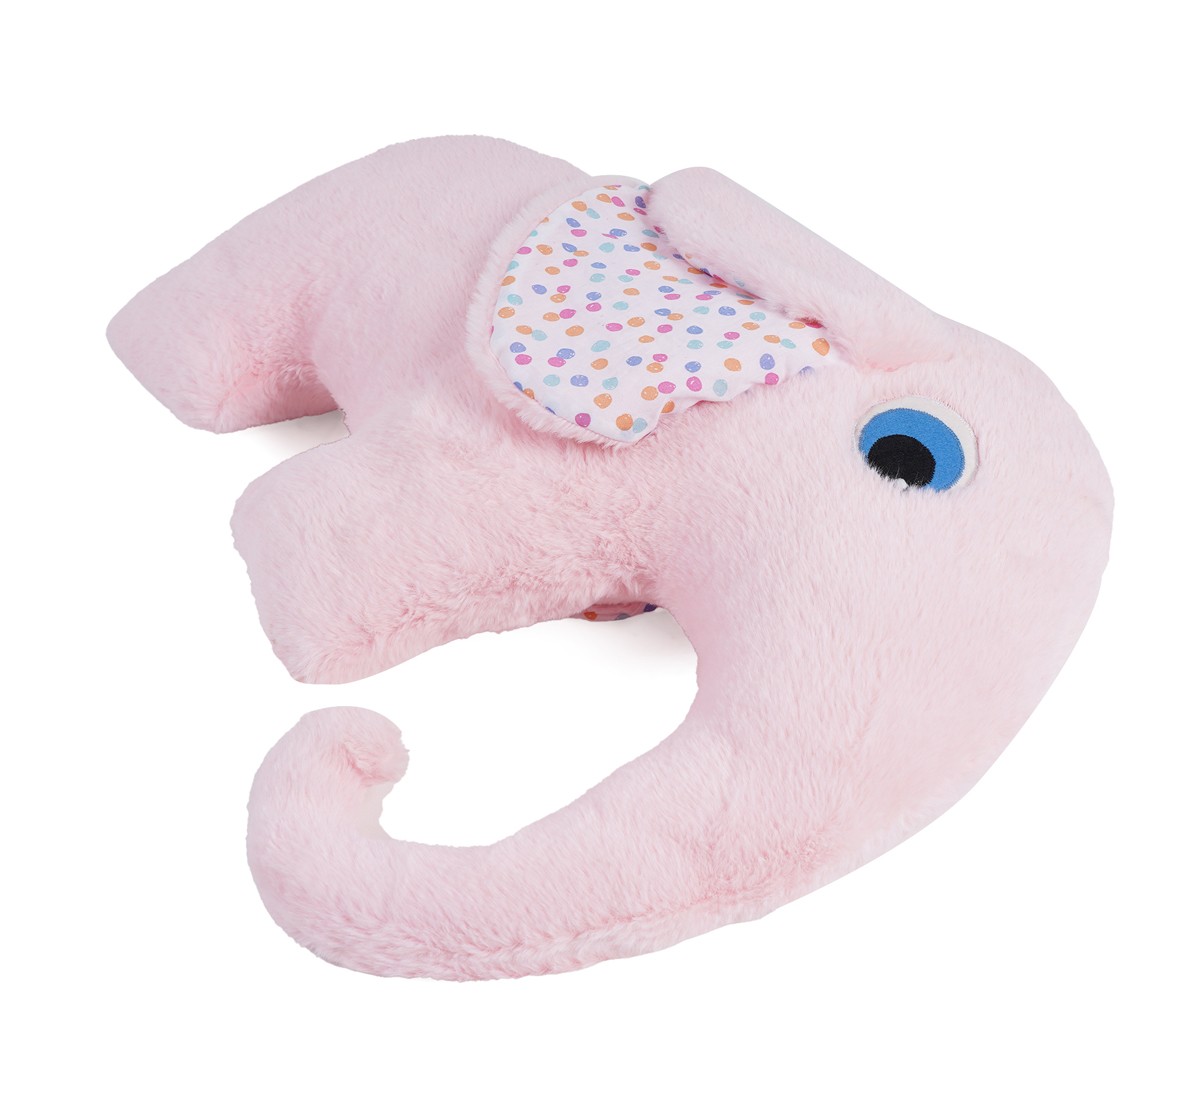 Fuzzbuzz Pink Elephant Cushion For Kids, 2M+